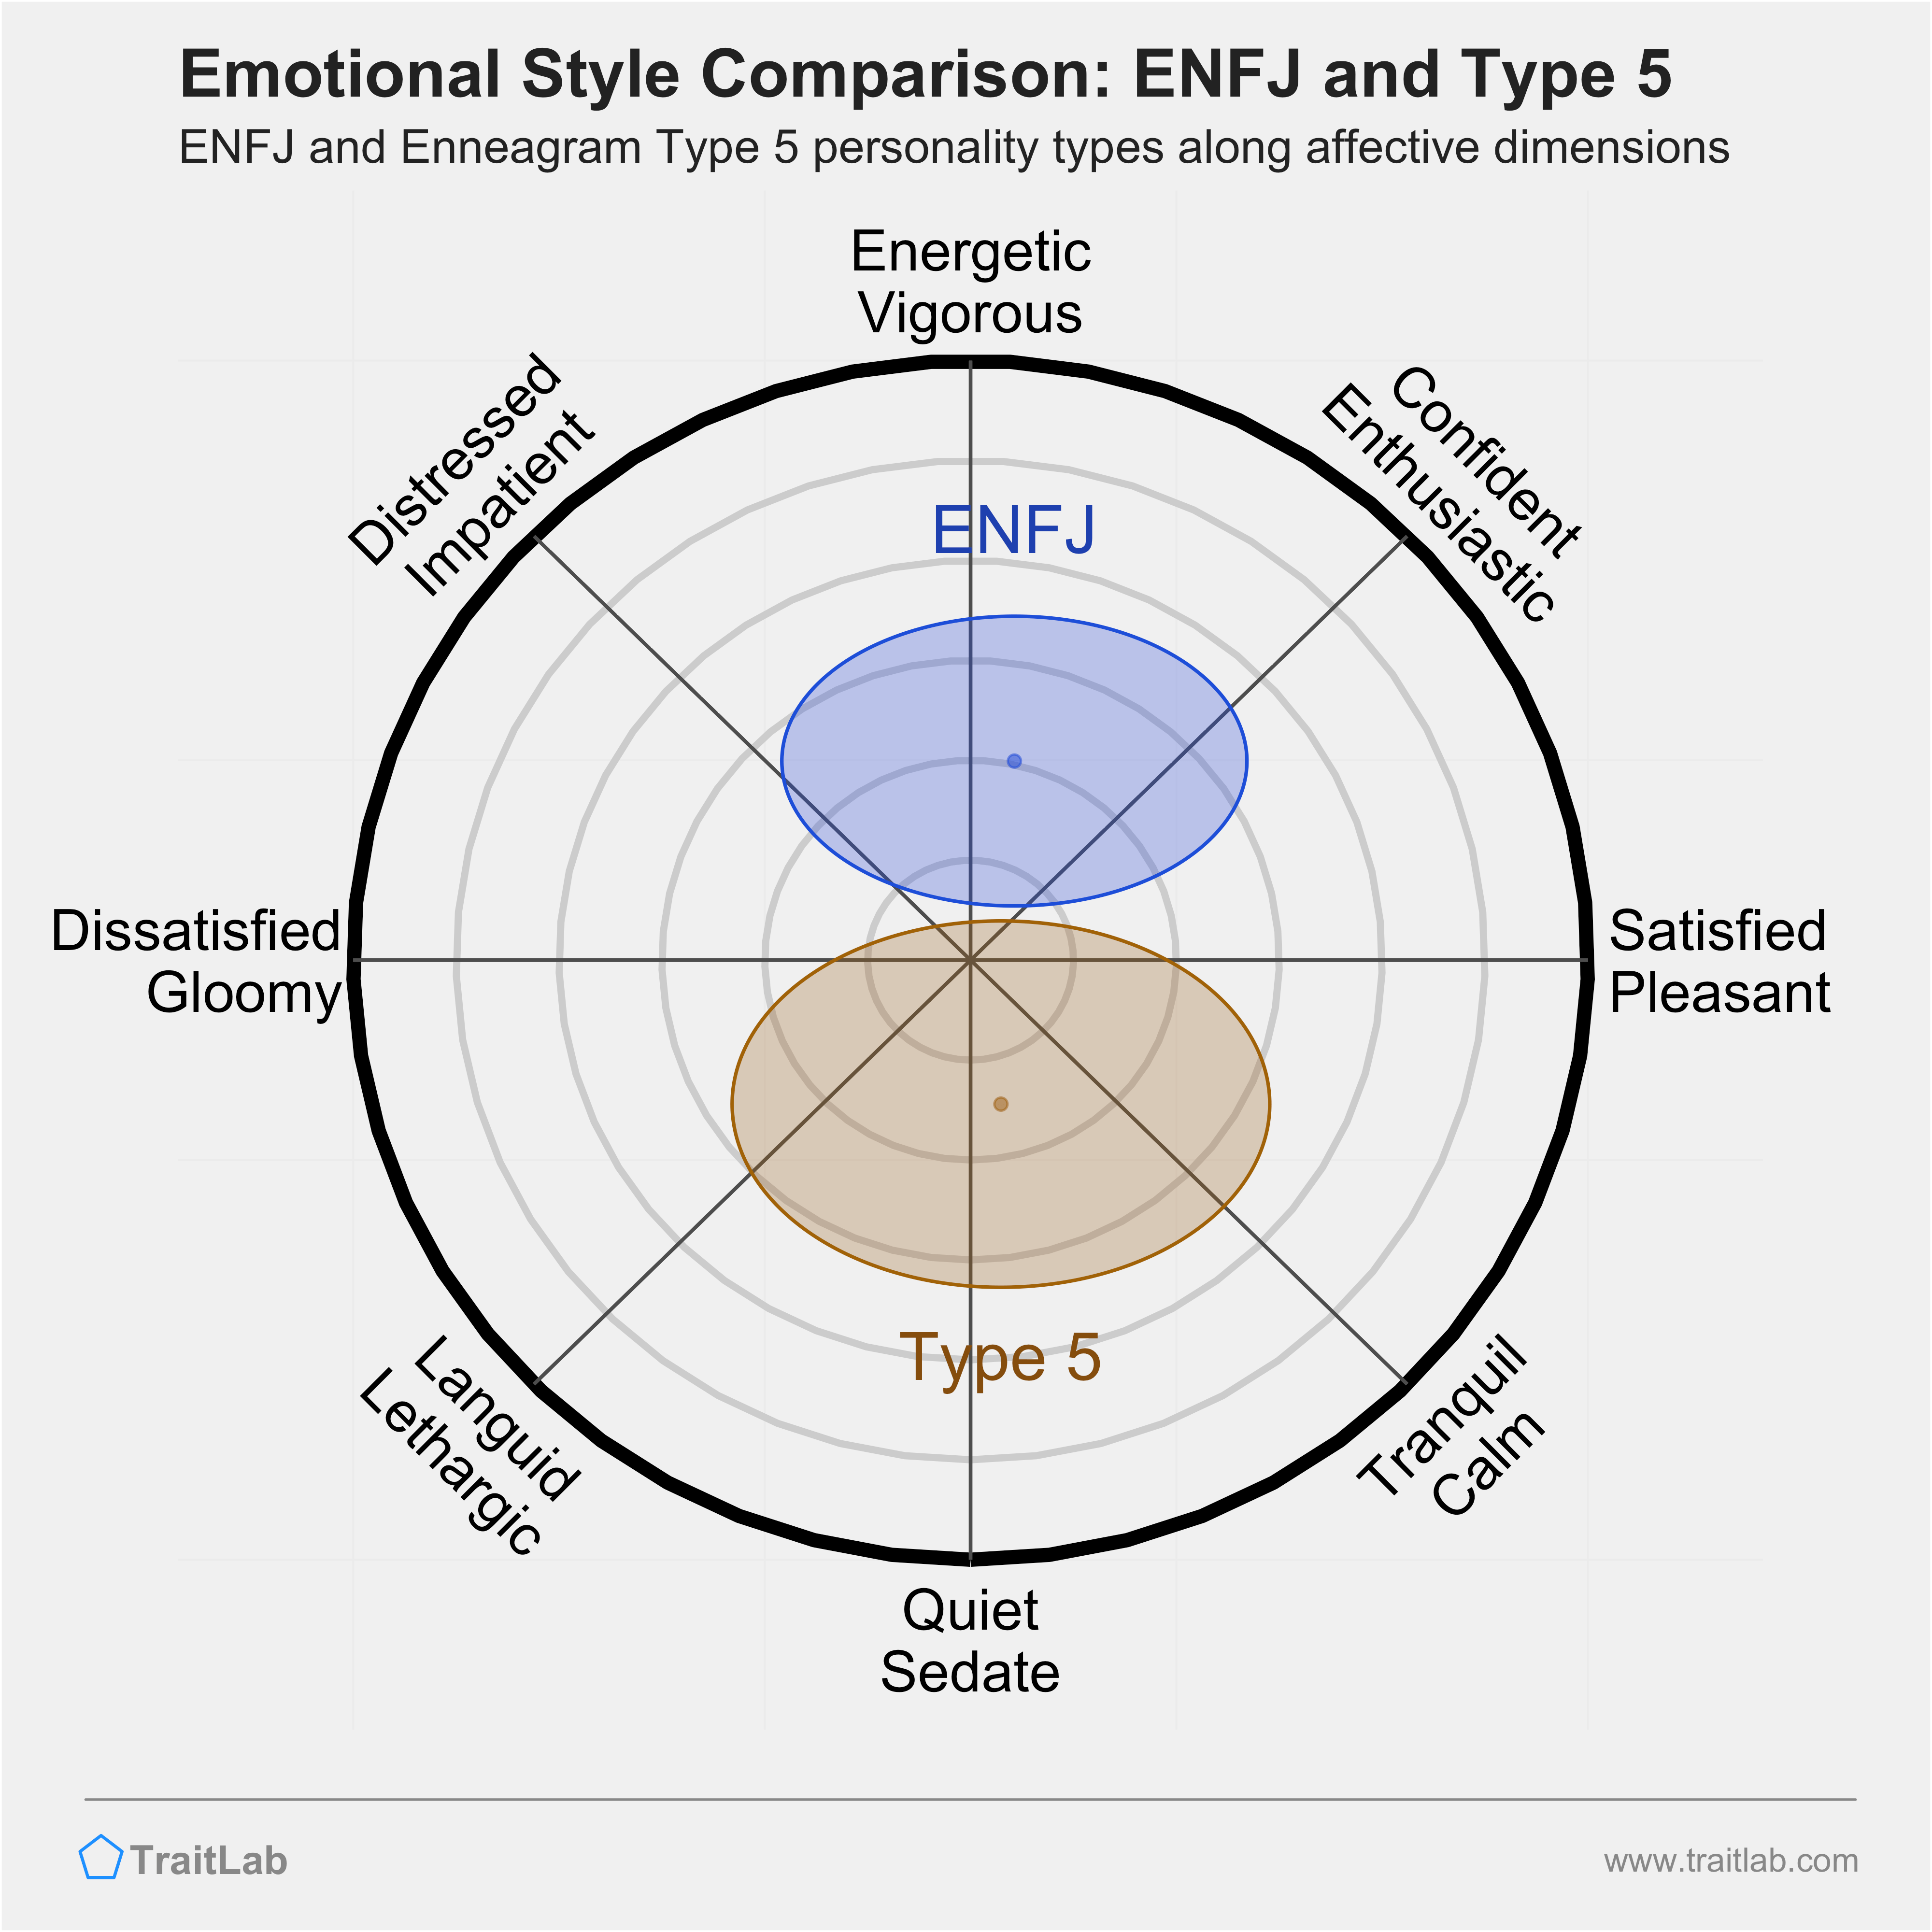 ENFJ and Type 5 comparison across emotional (affective) dimensions